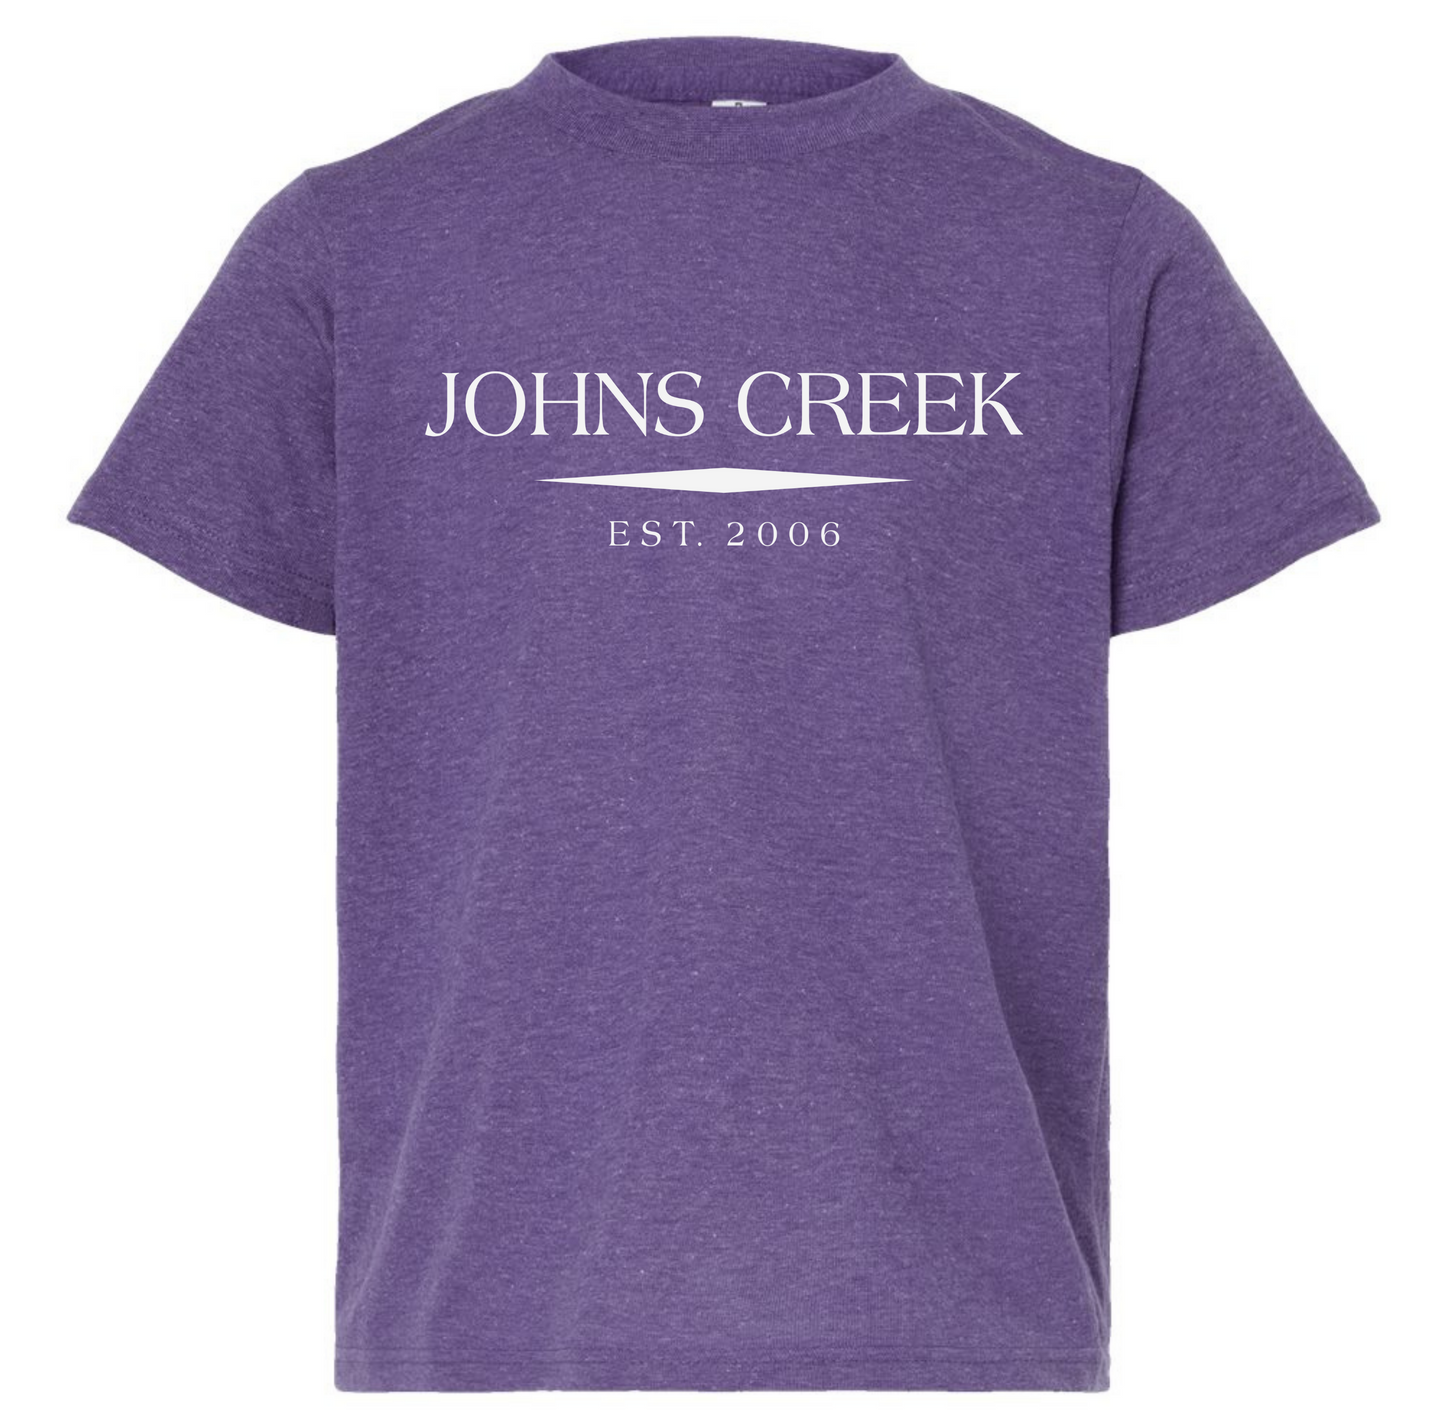 Johns Creek T-Shirt